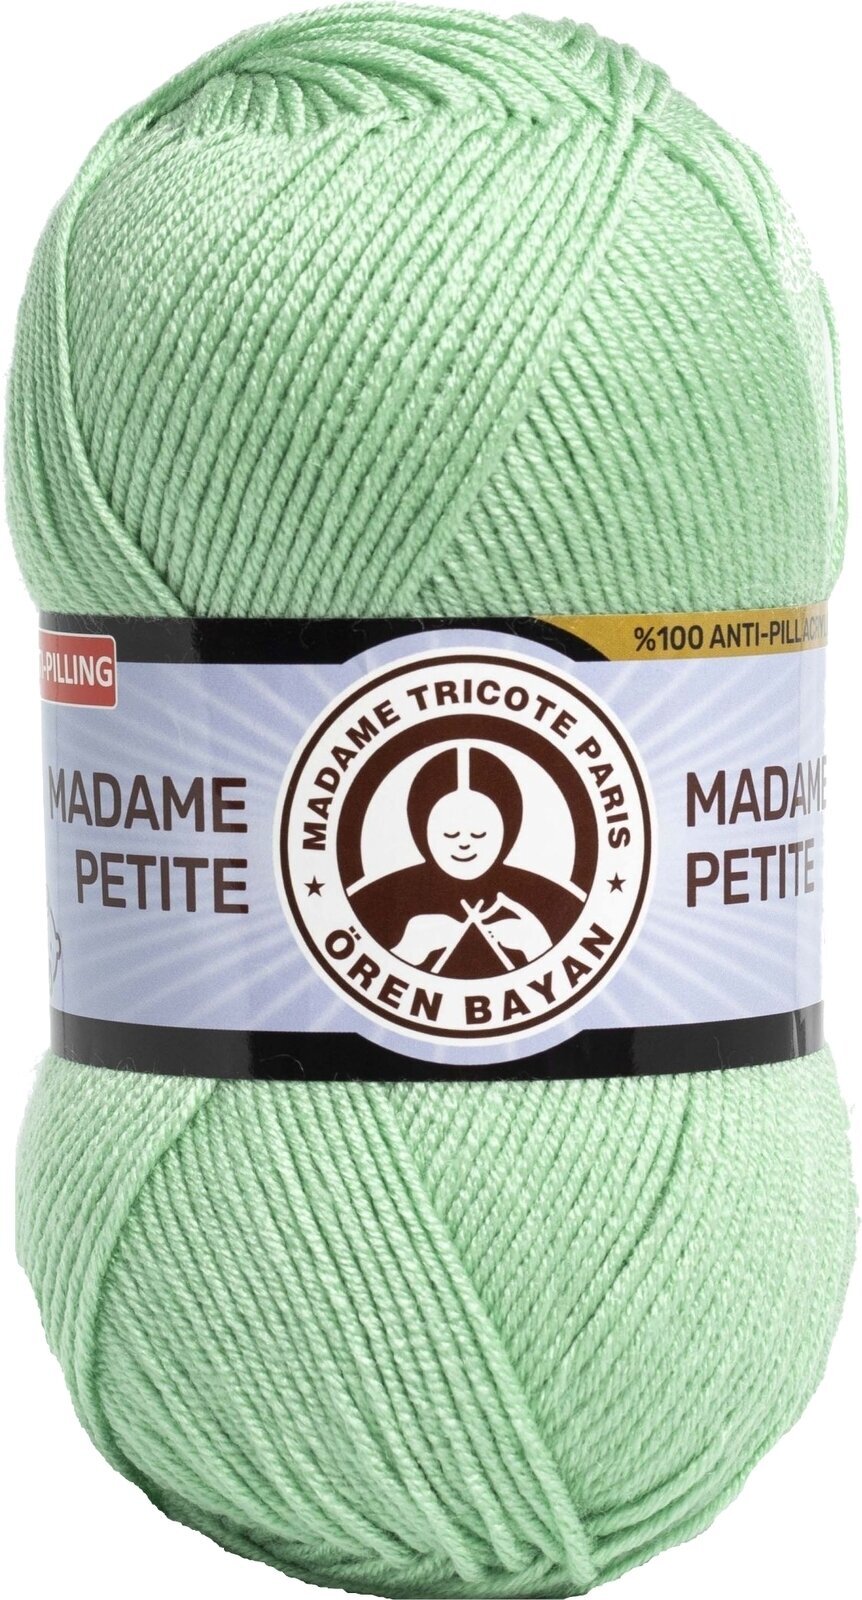 Knitting Yarn Madame Tricote Paris Madame Petite 3848 125 Knitting Yarn